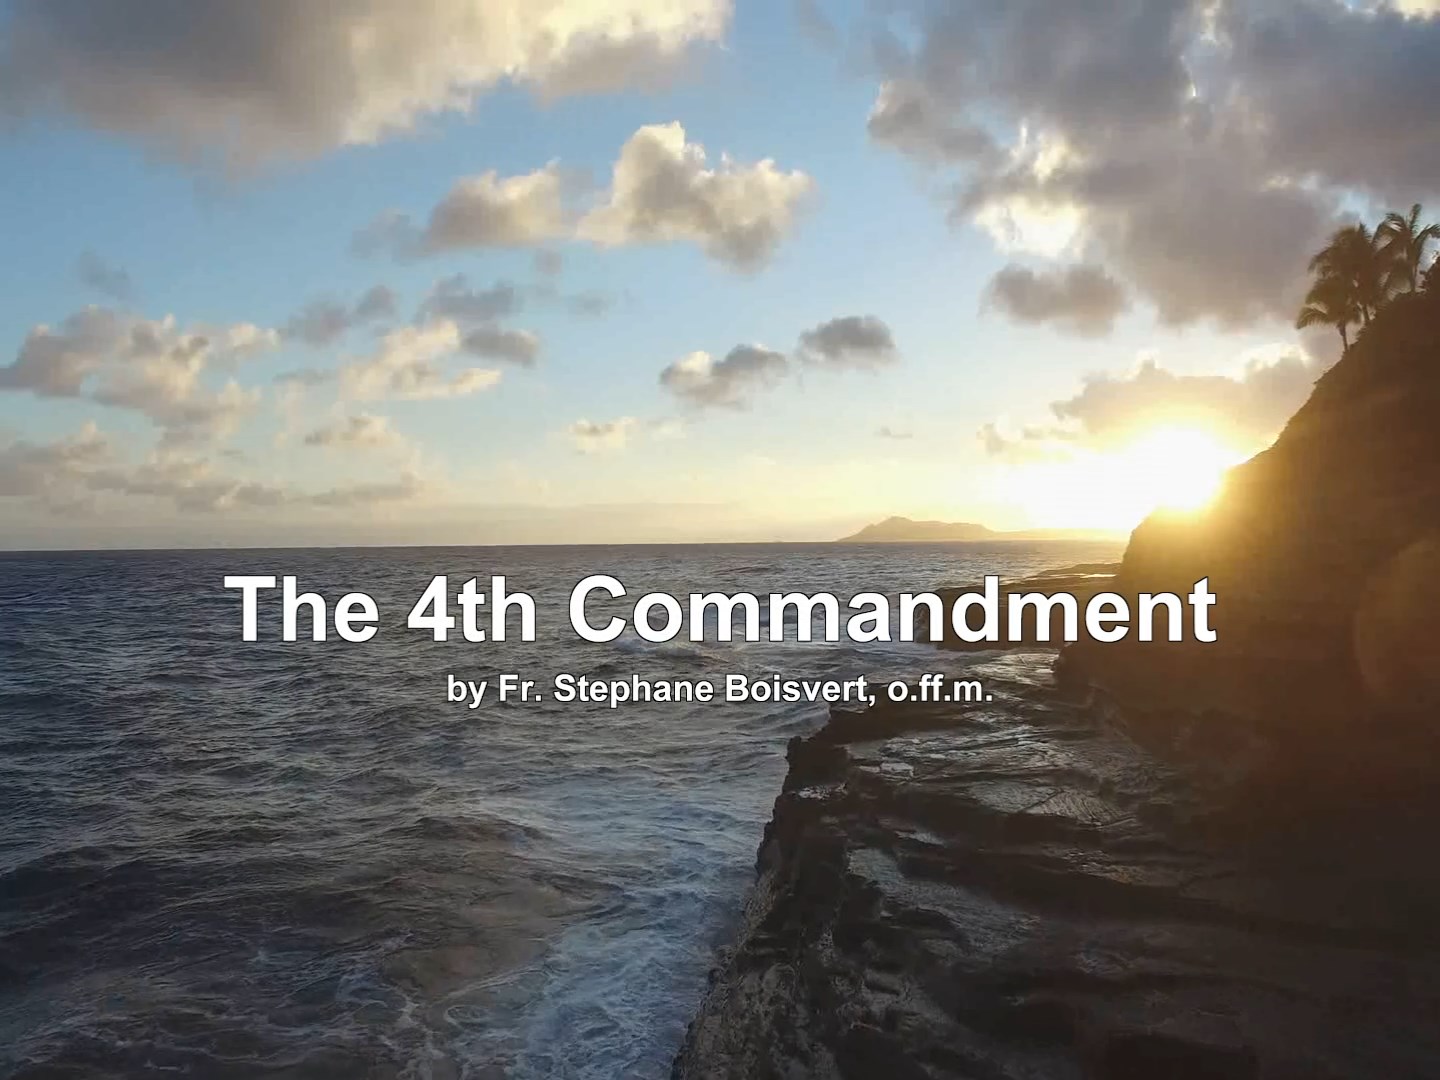 Le 4e commandement|The 4th commandment